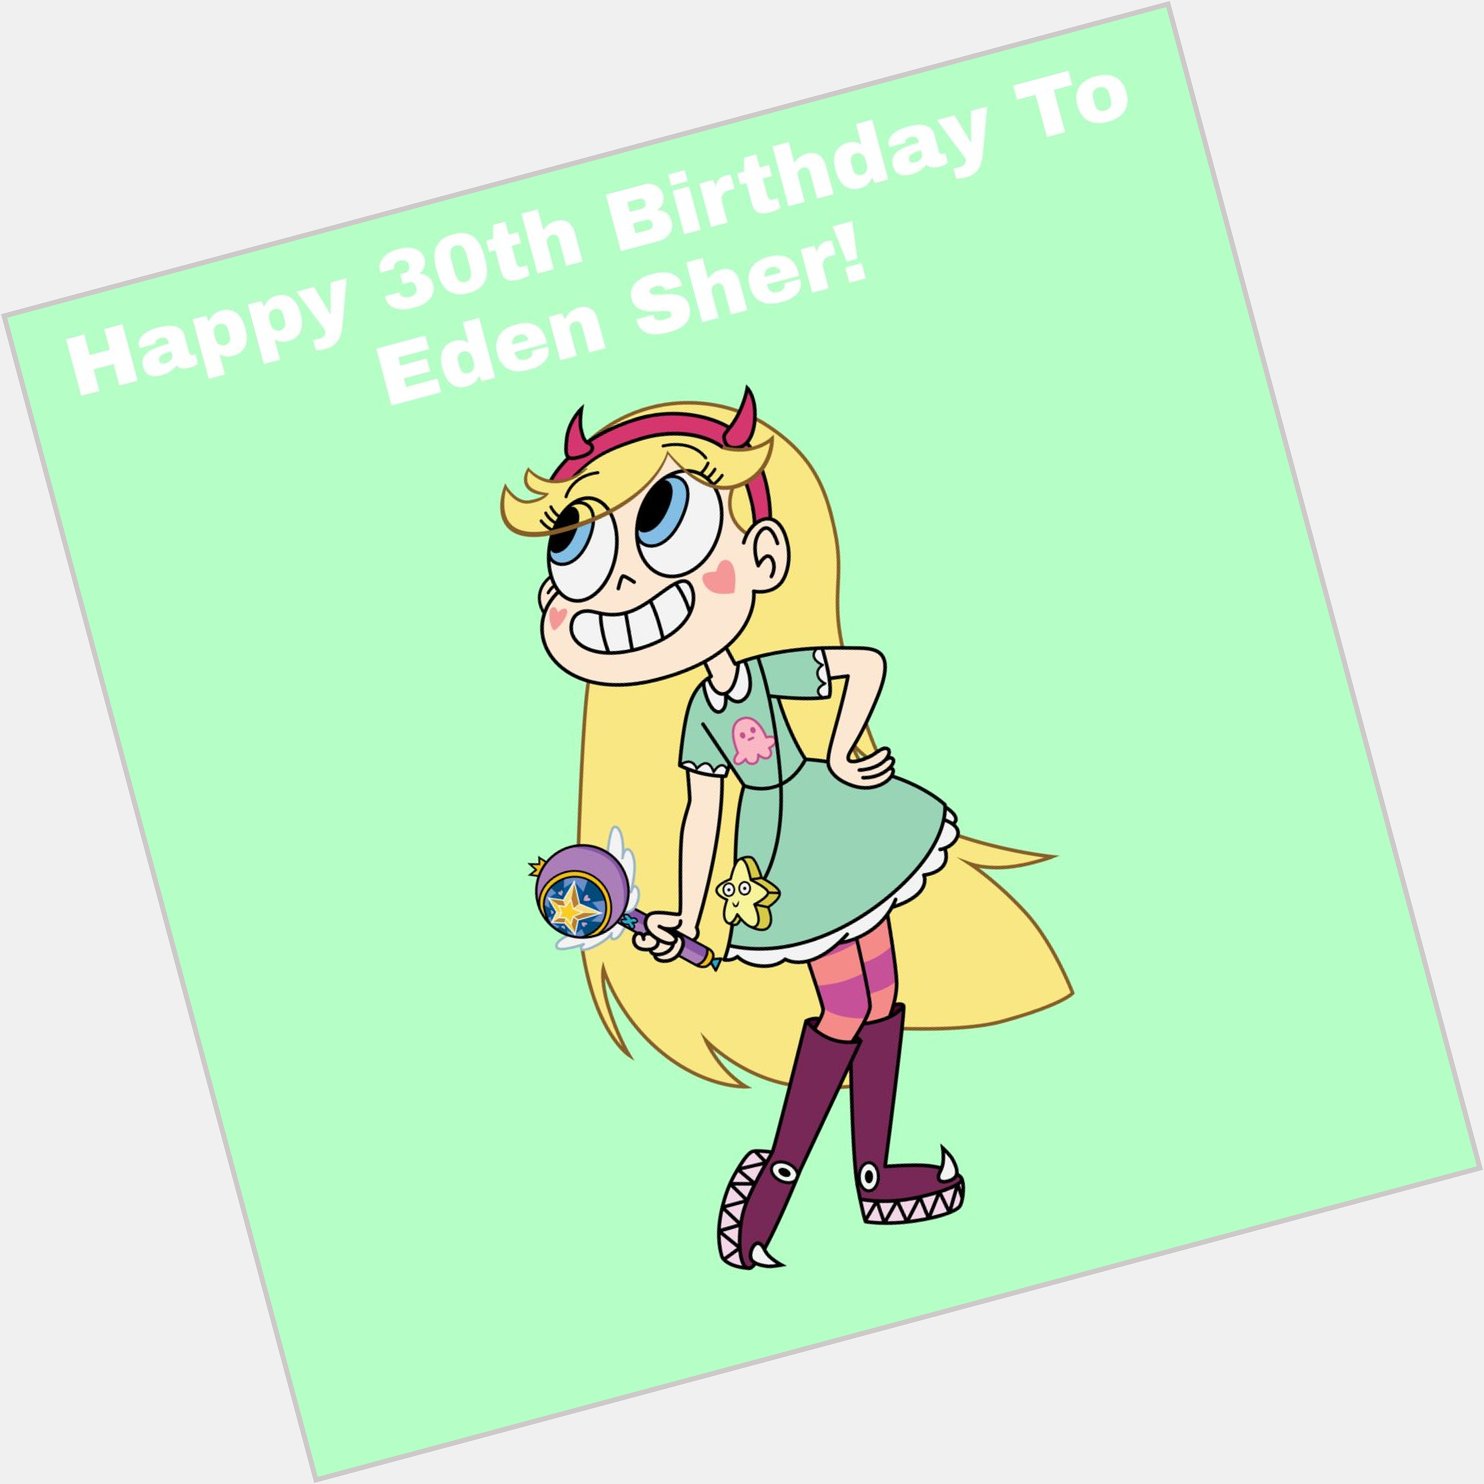 Happy 30th Birthday To Eden Sher!   